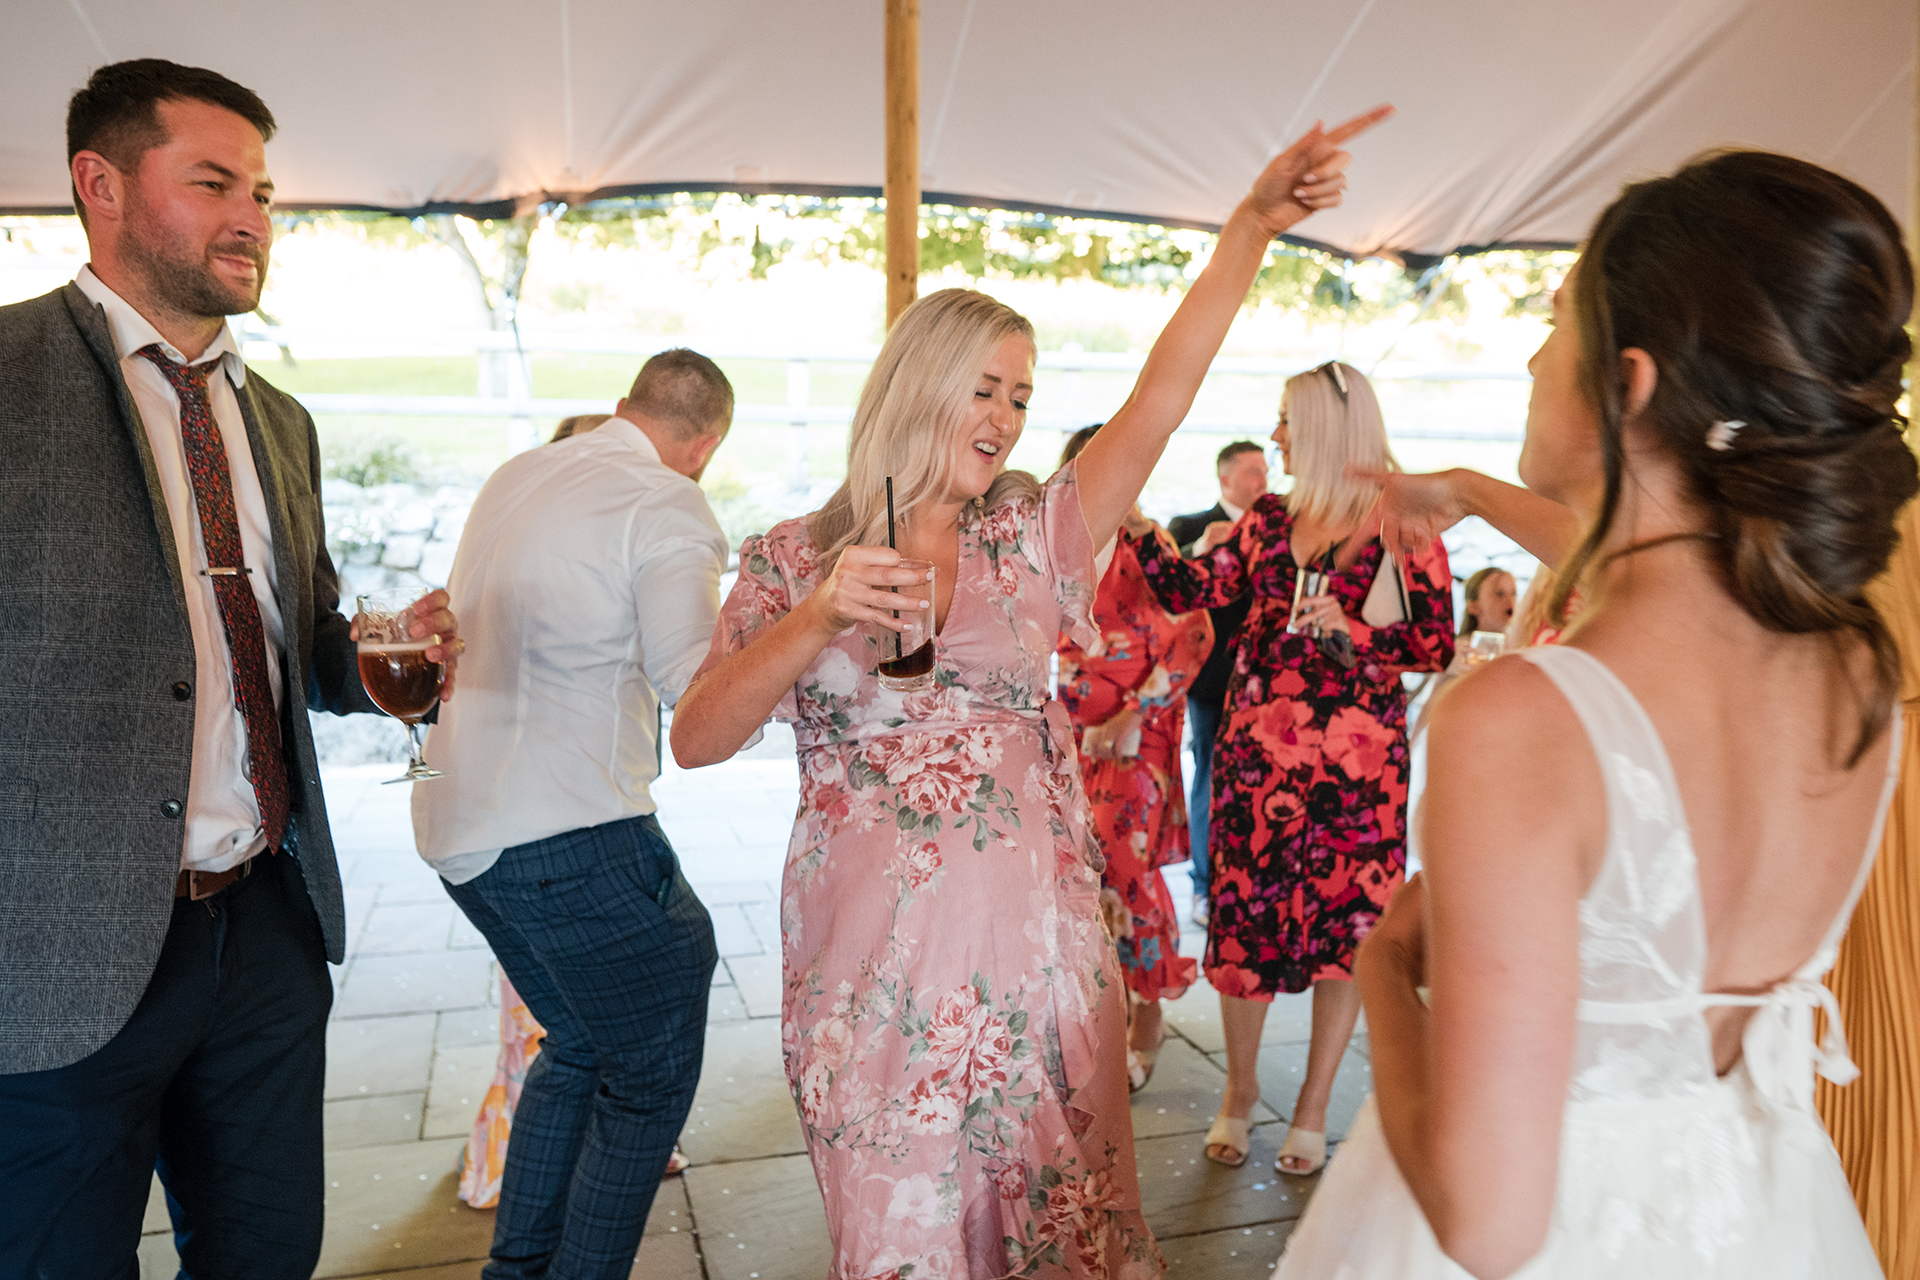 Dancing at Alison and matt's woodland wedding